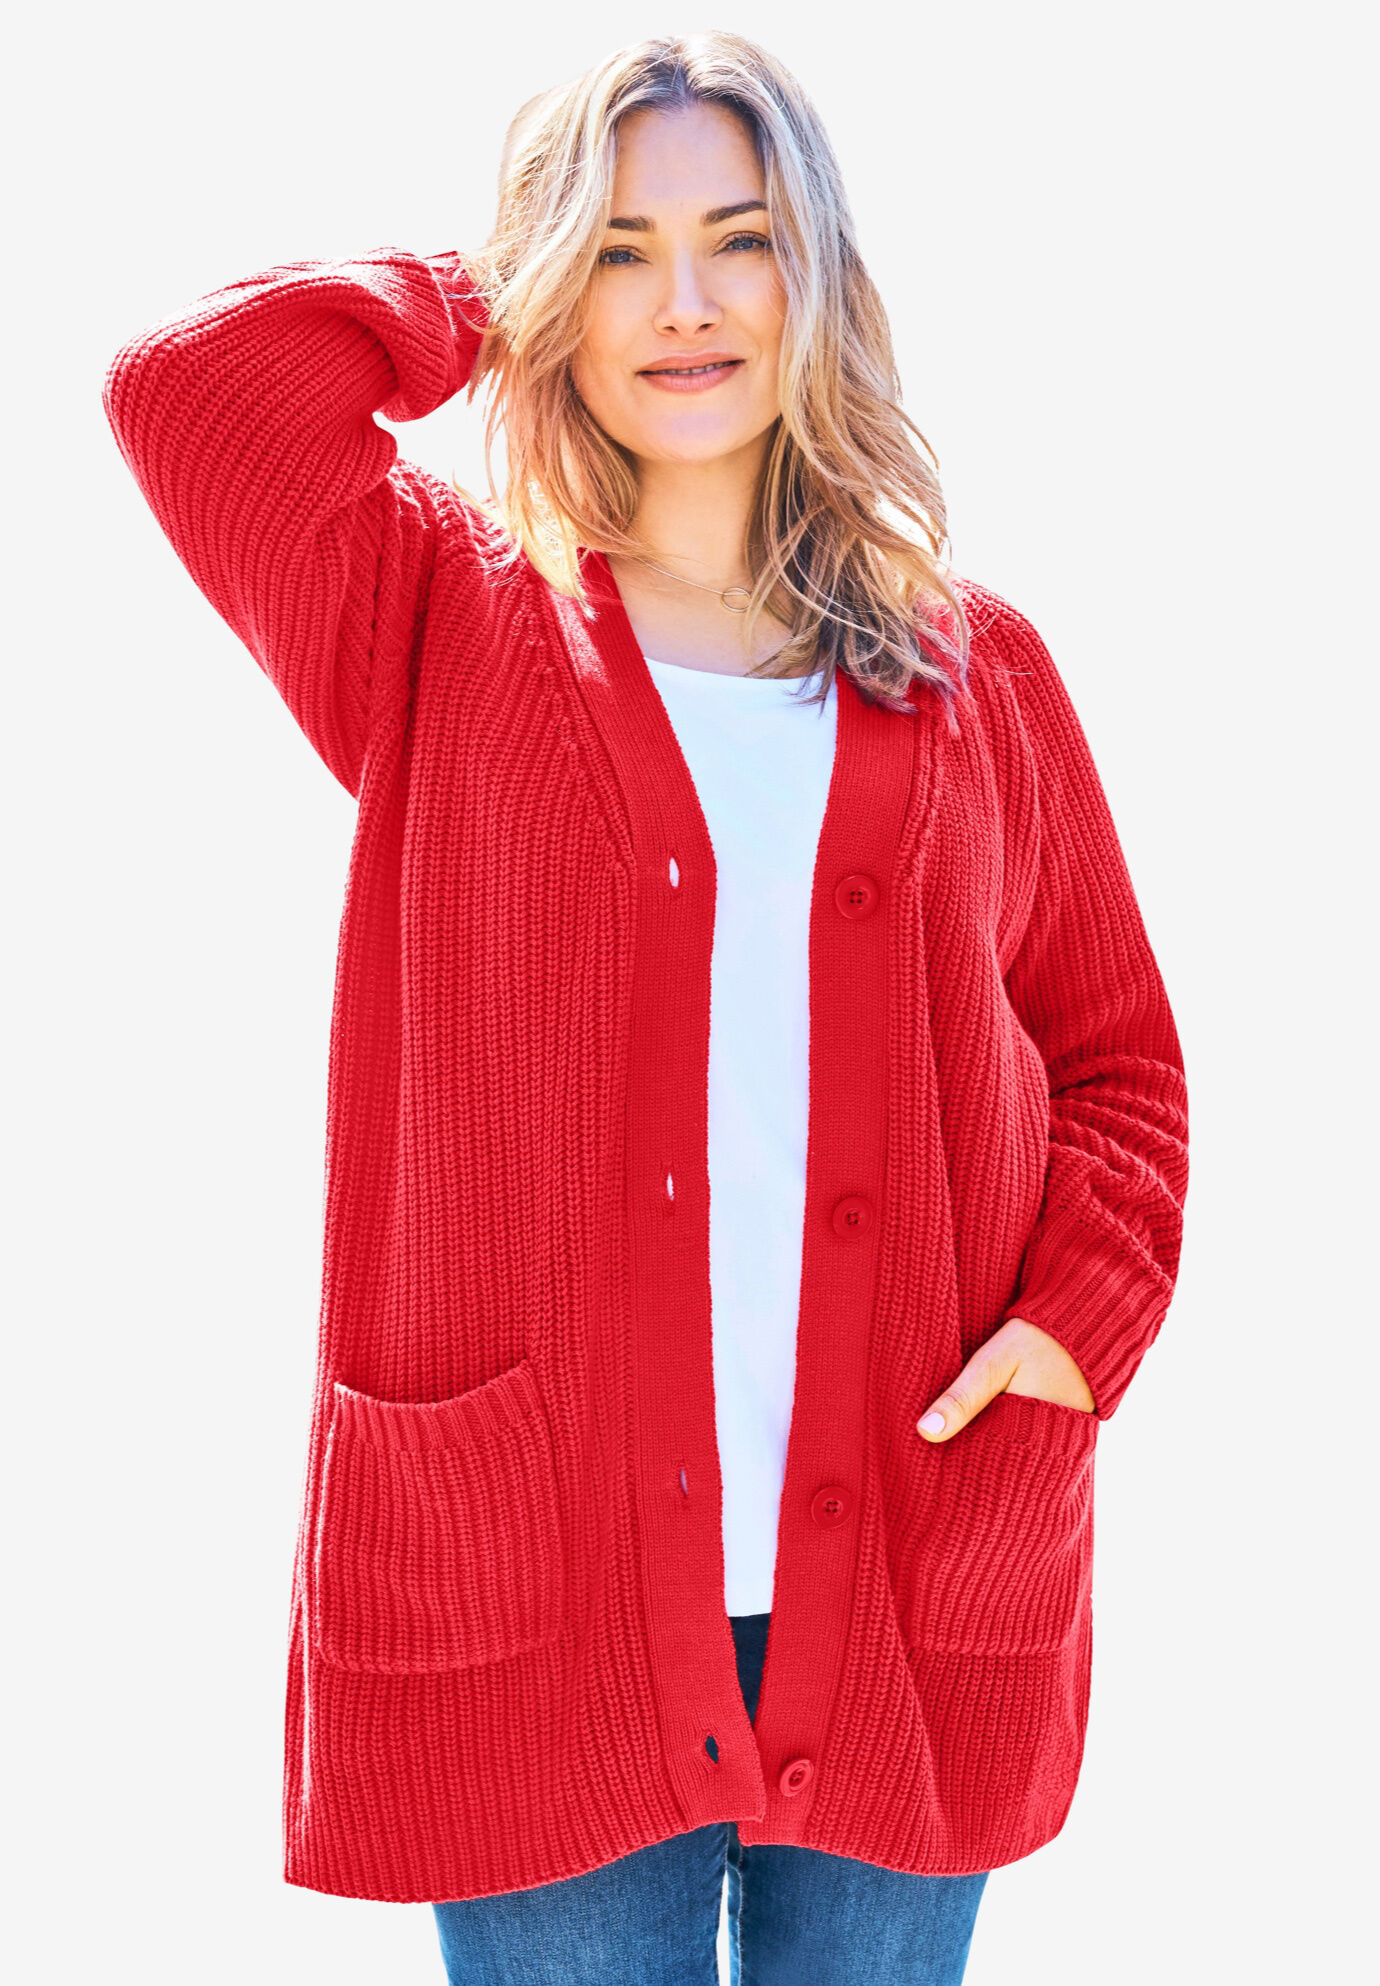 discount 67% Red M Intrama cardigan WOMEN FASHION Jumpers & Sweatshirts Cardigan Casual 